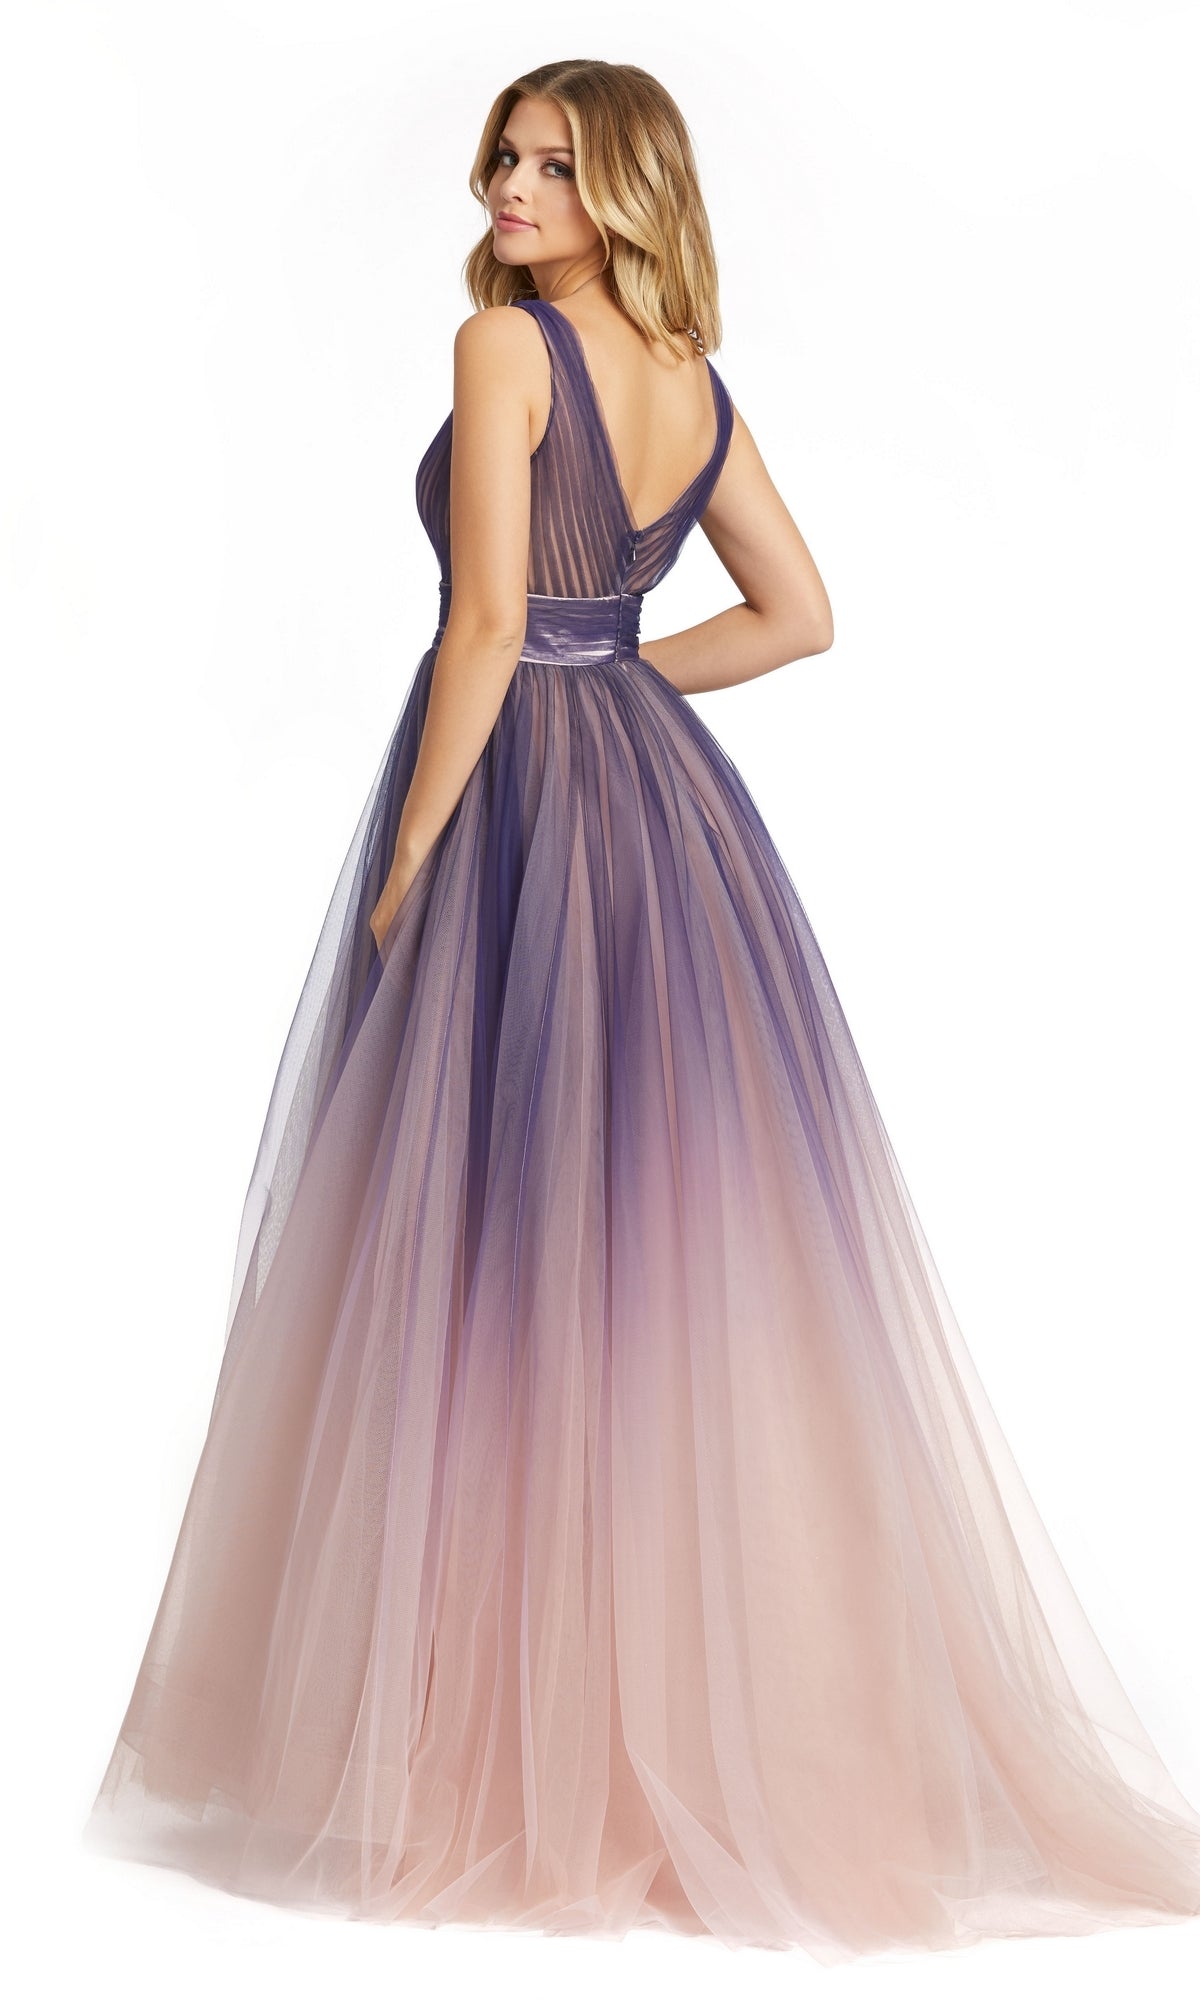 Long Formal Dress 20221 by Mac Duggal